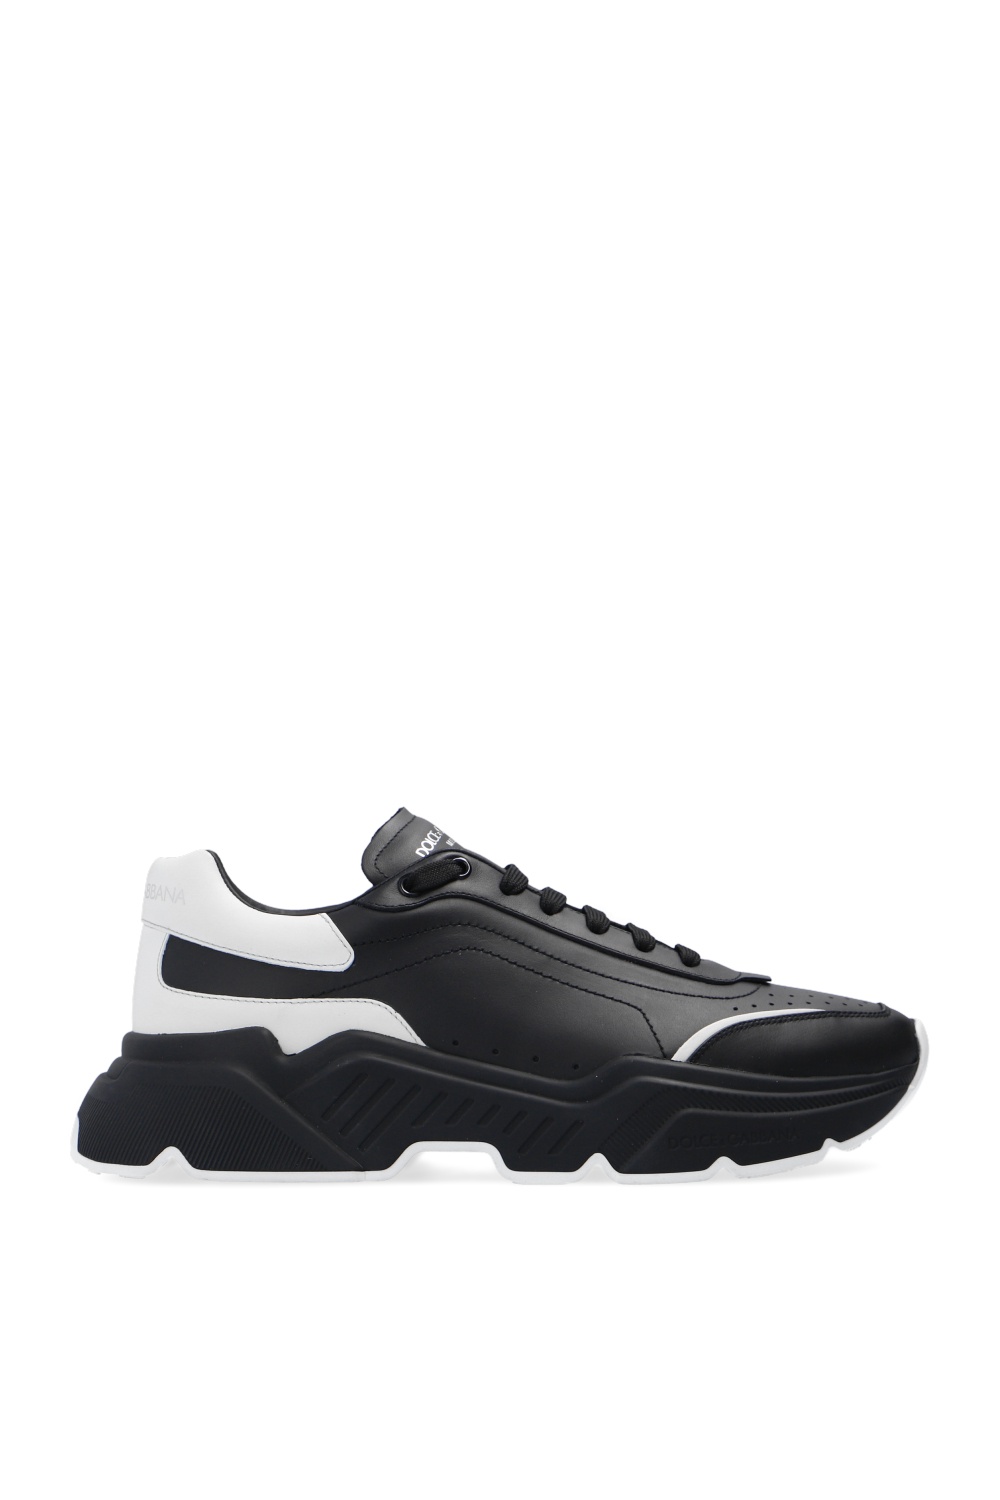 Dolce & Gabbana ‘Daymaster’ sneakers | Men's Shoes | Vitkac